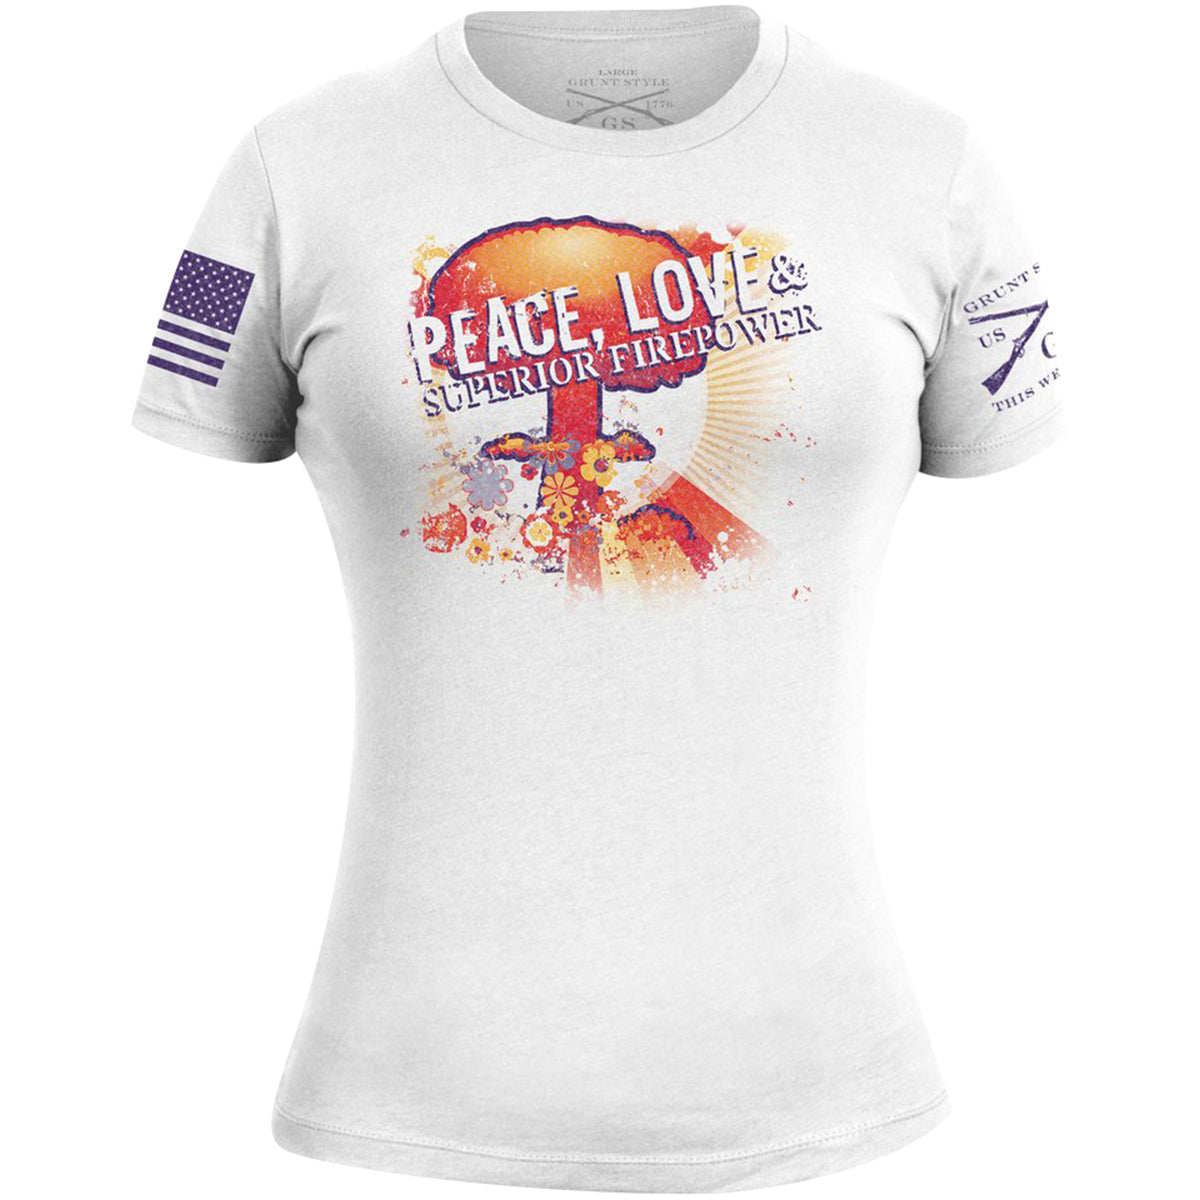 Grunt Style Women's Peace, Love & Superior Firepower T-Shirt - White Grunt Style